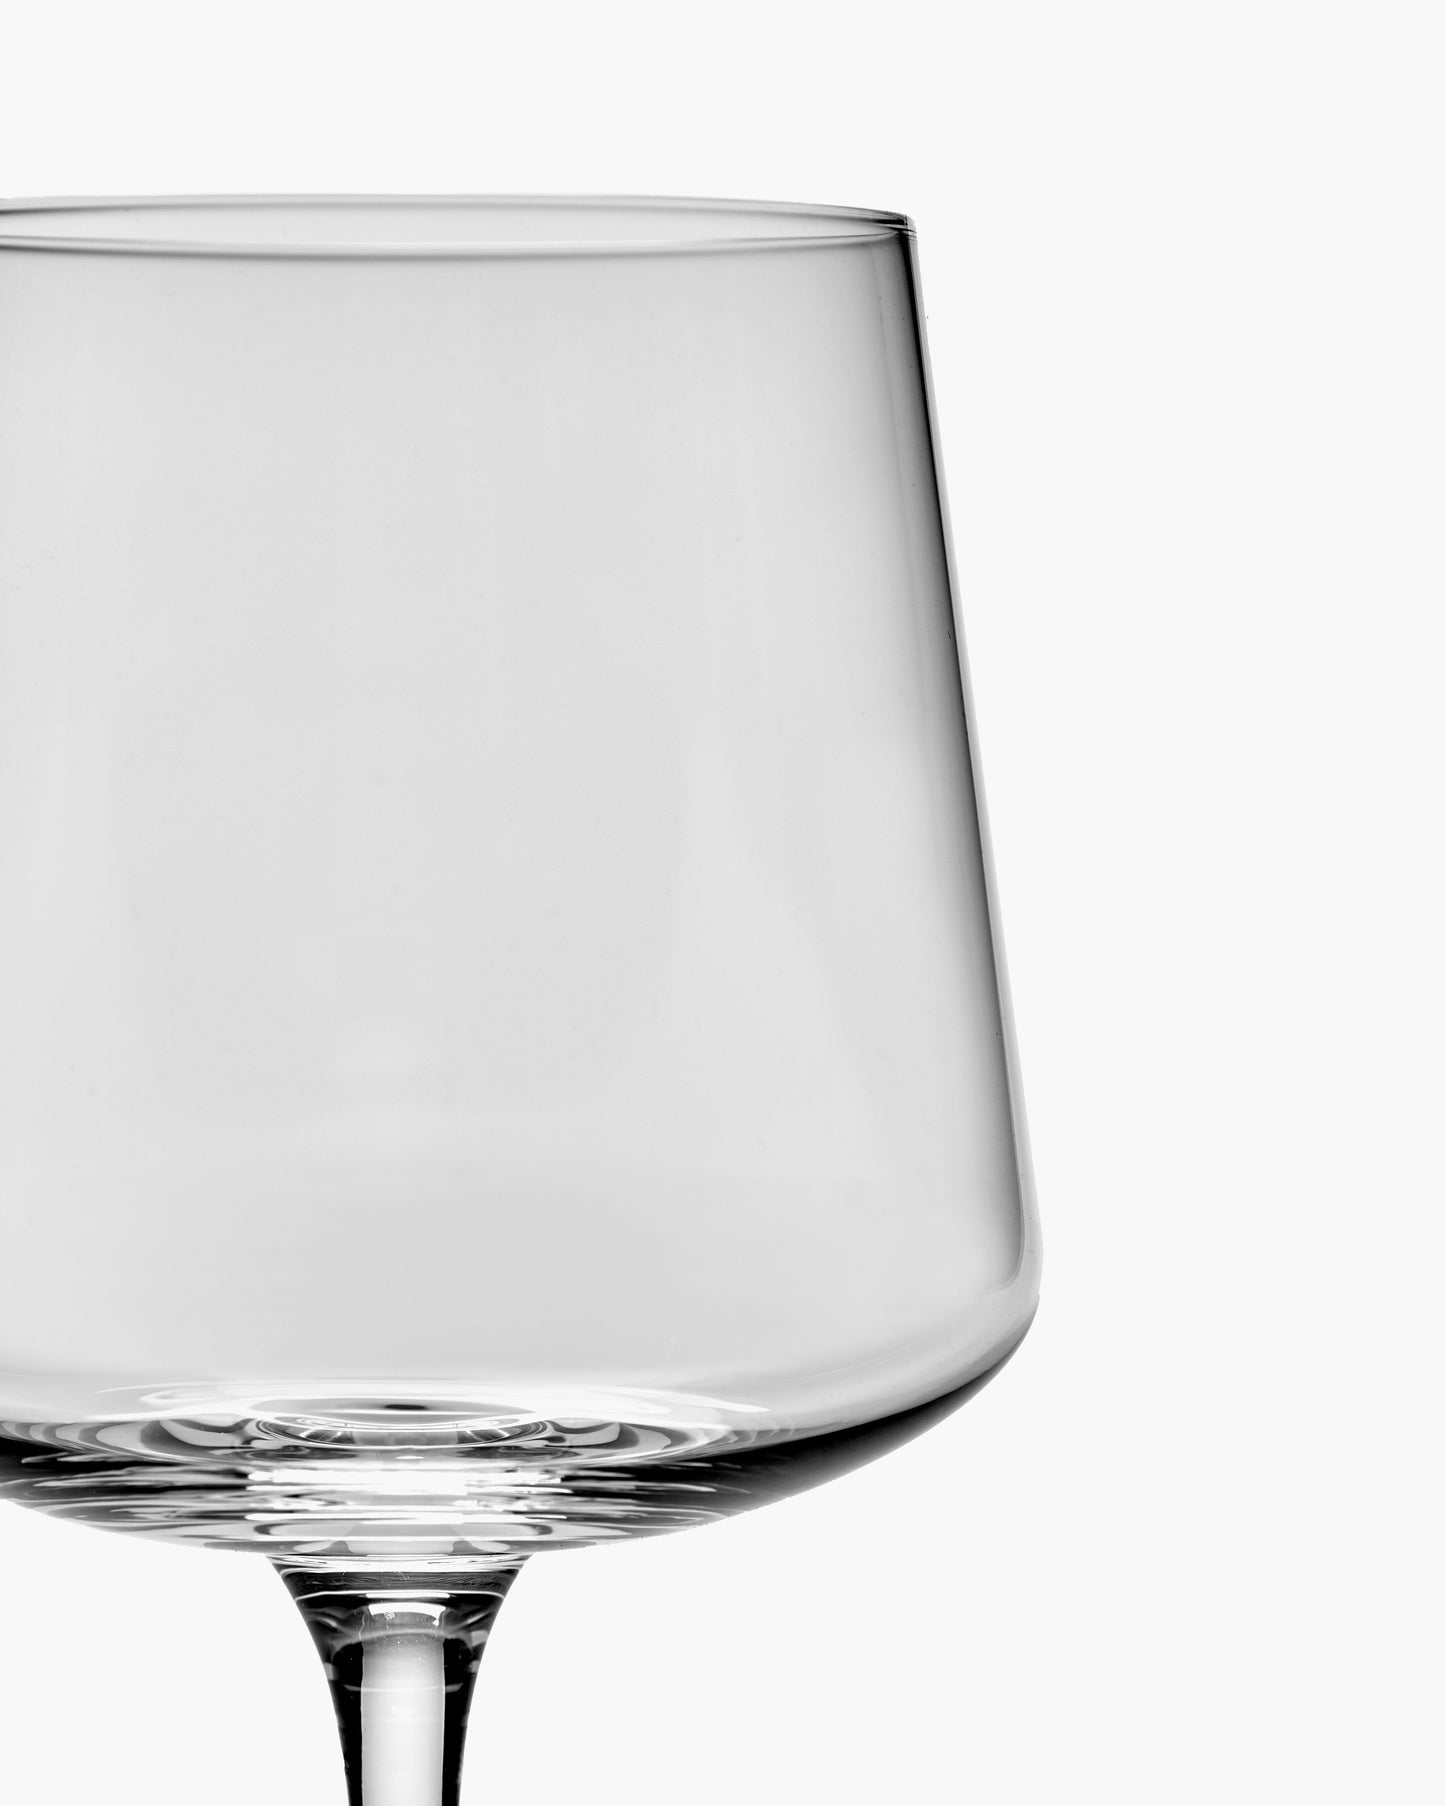 NIDO - Weißweinglas